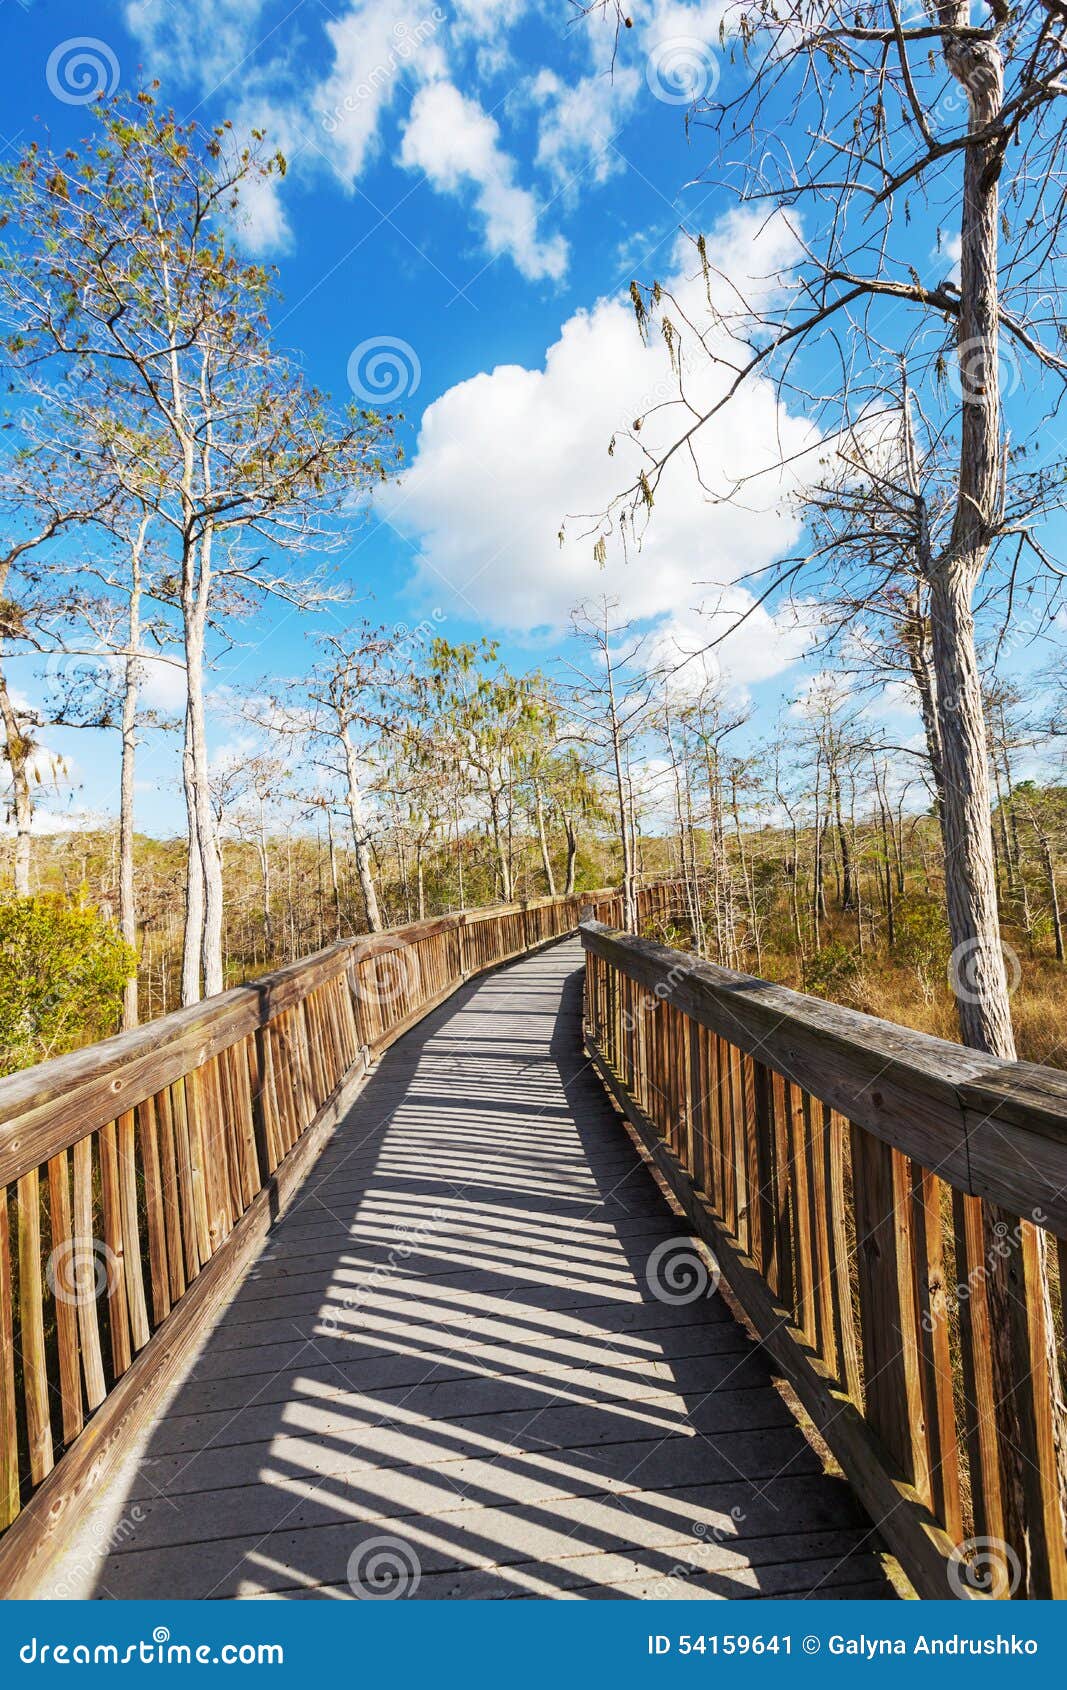 Boardwalk In Swamp Stock Image Image Of Destinations 54159641